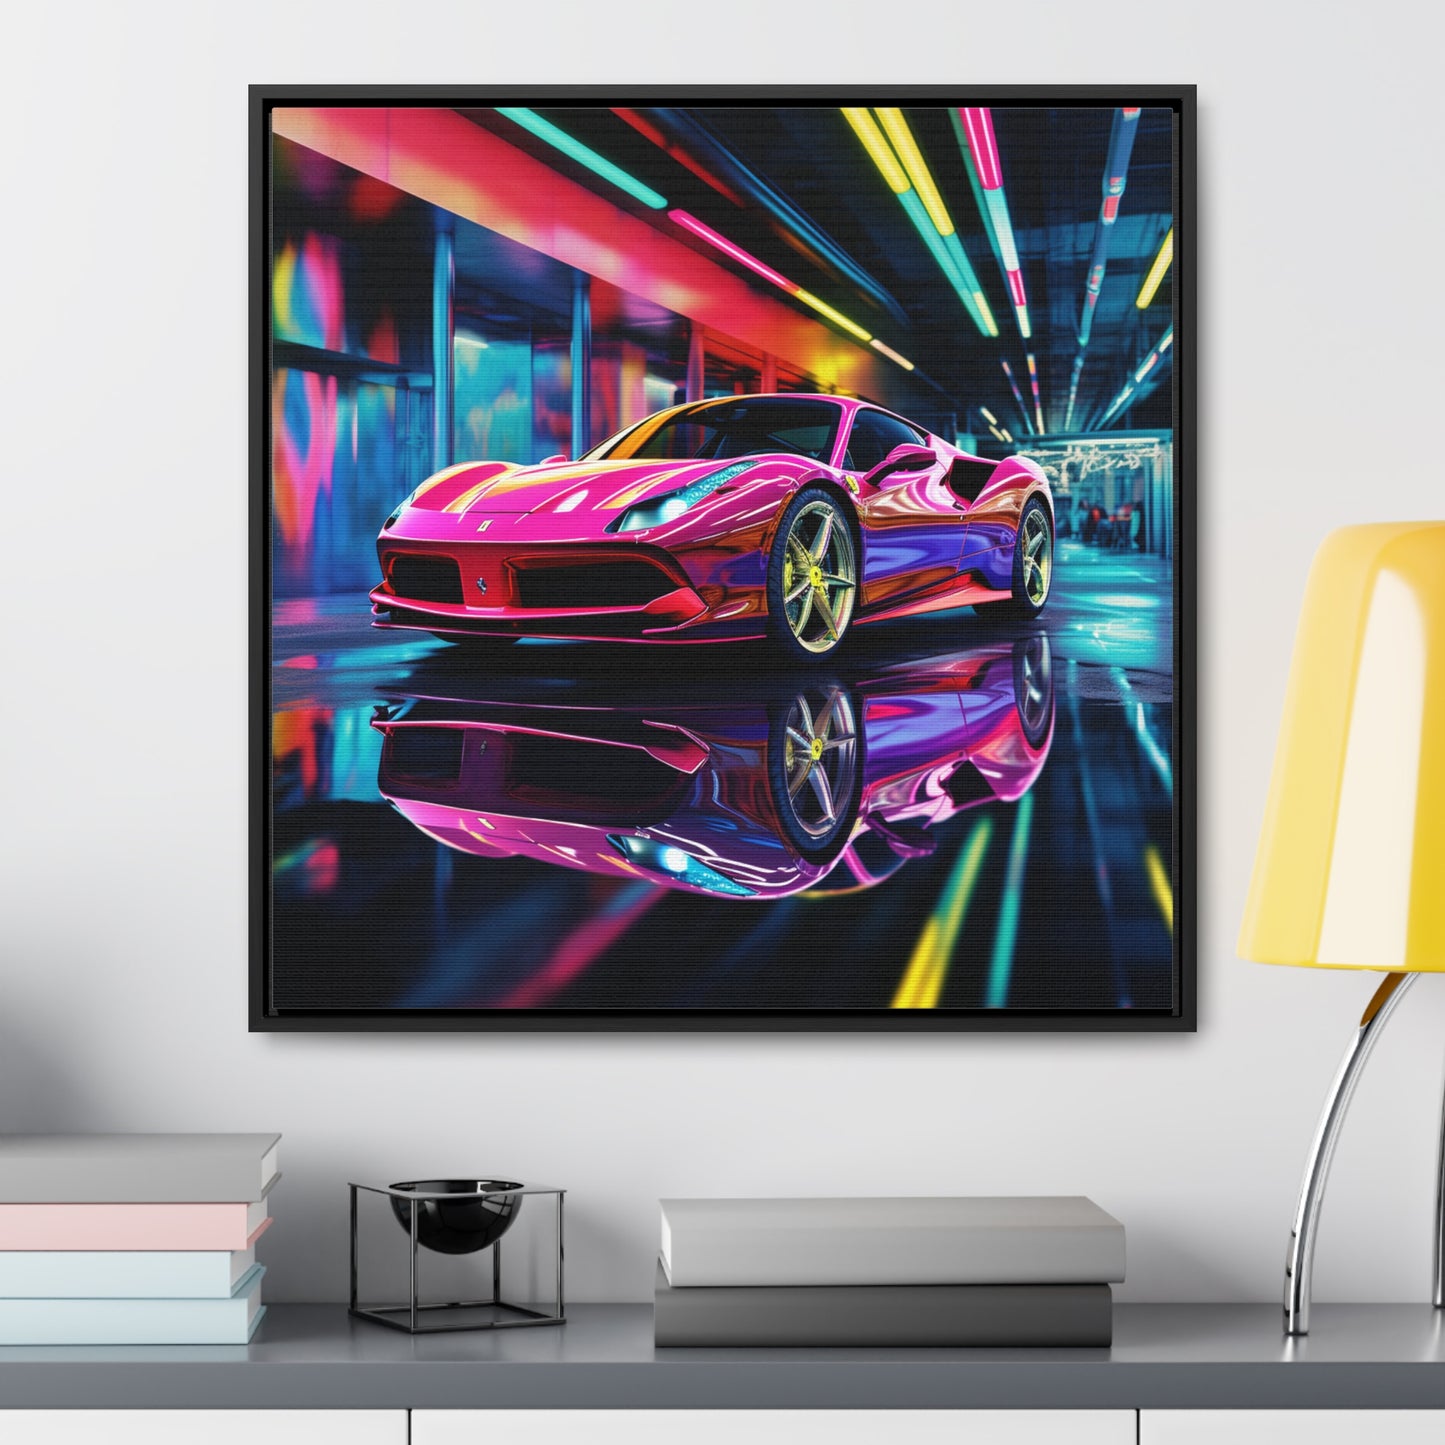 Gallery Canvas Wraps, Square Frame Pink Macro Ferrari 4